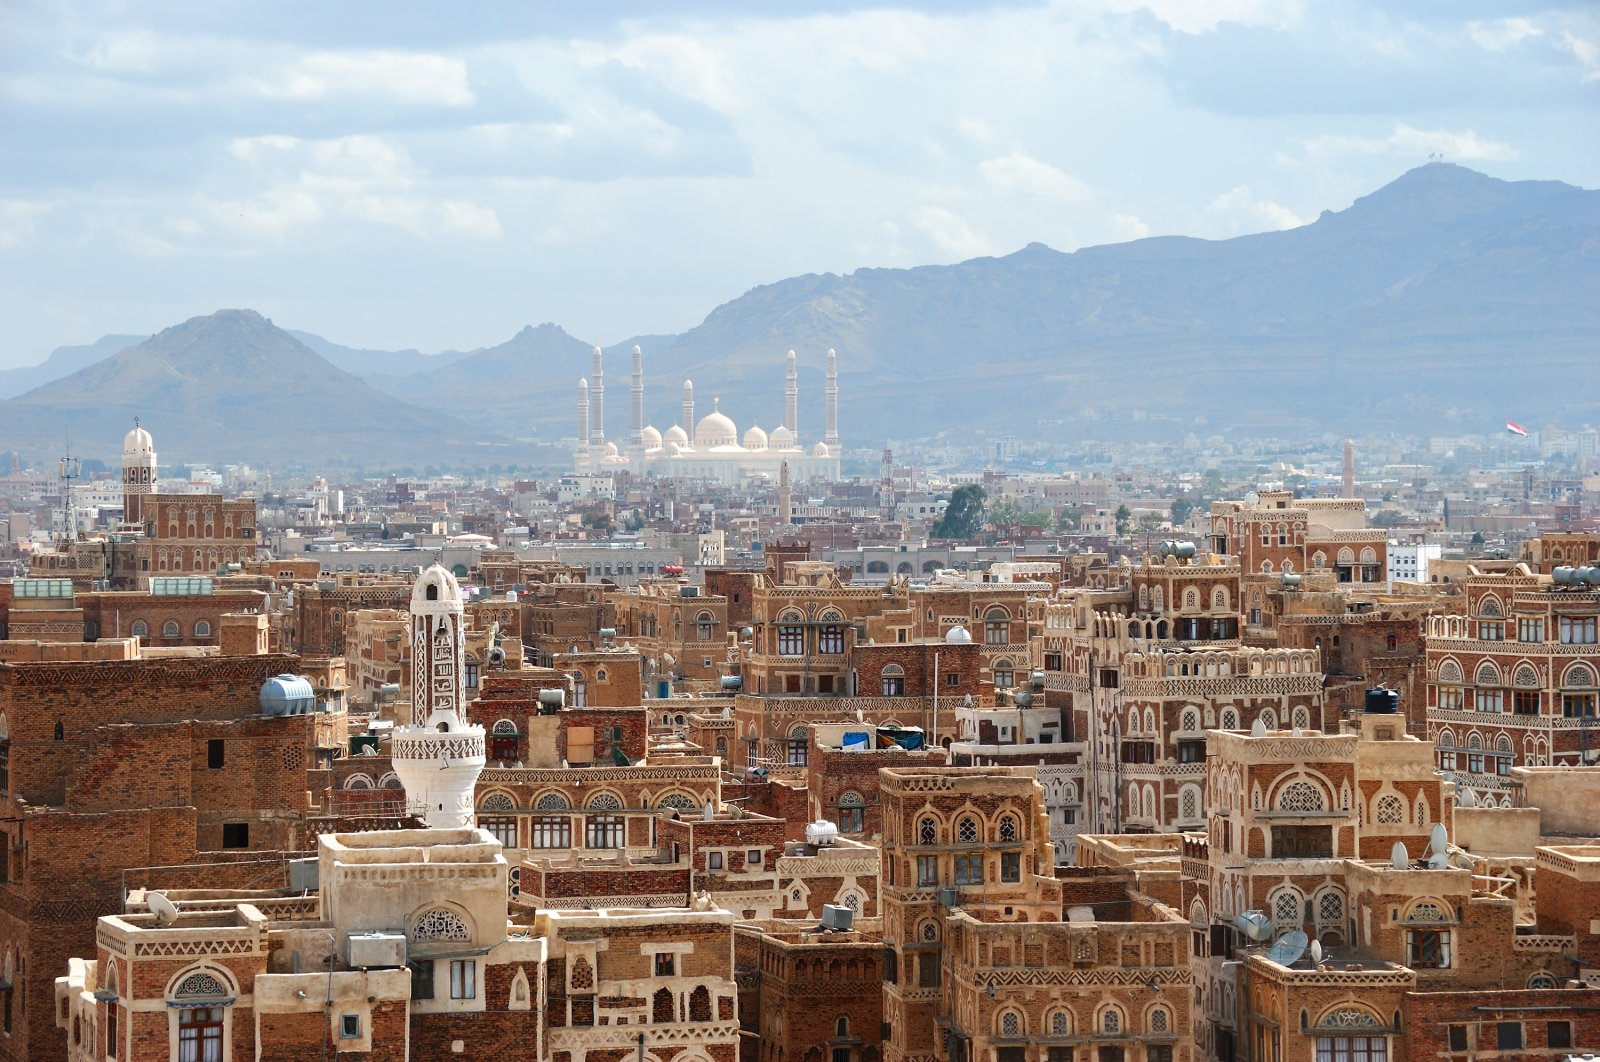 The Old City of Sanaa, Yemen, seen in an undated photo. (Shutterstock Photo)